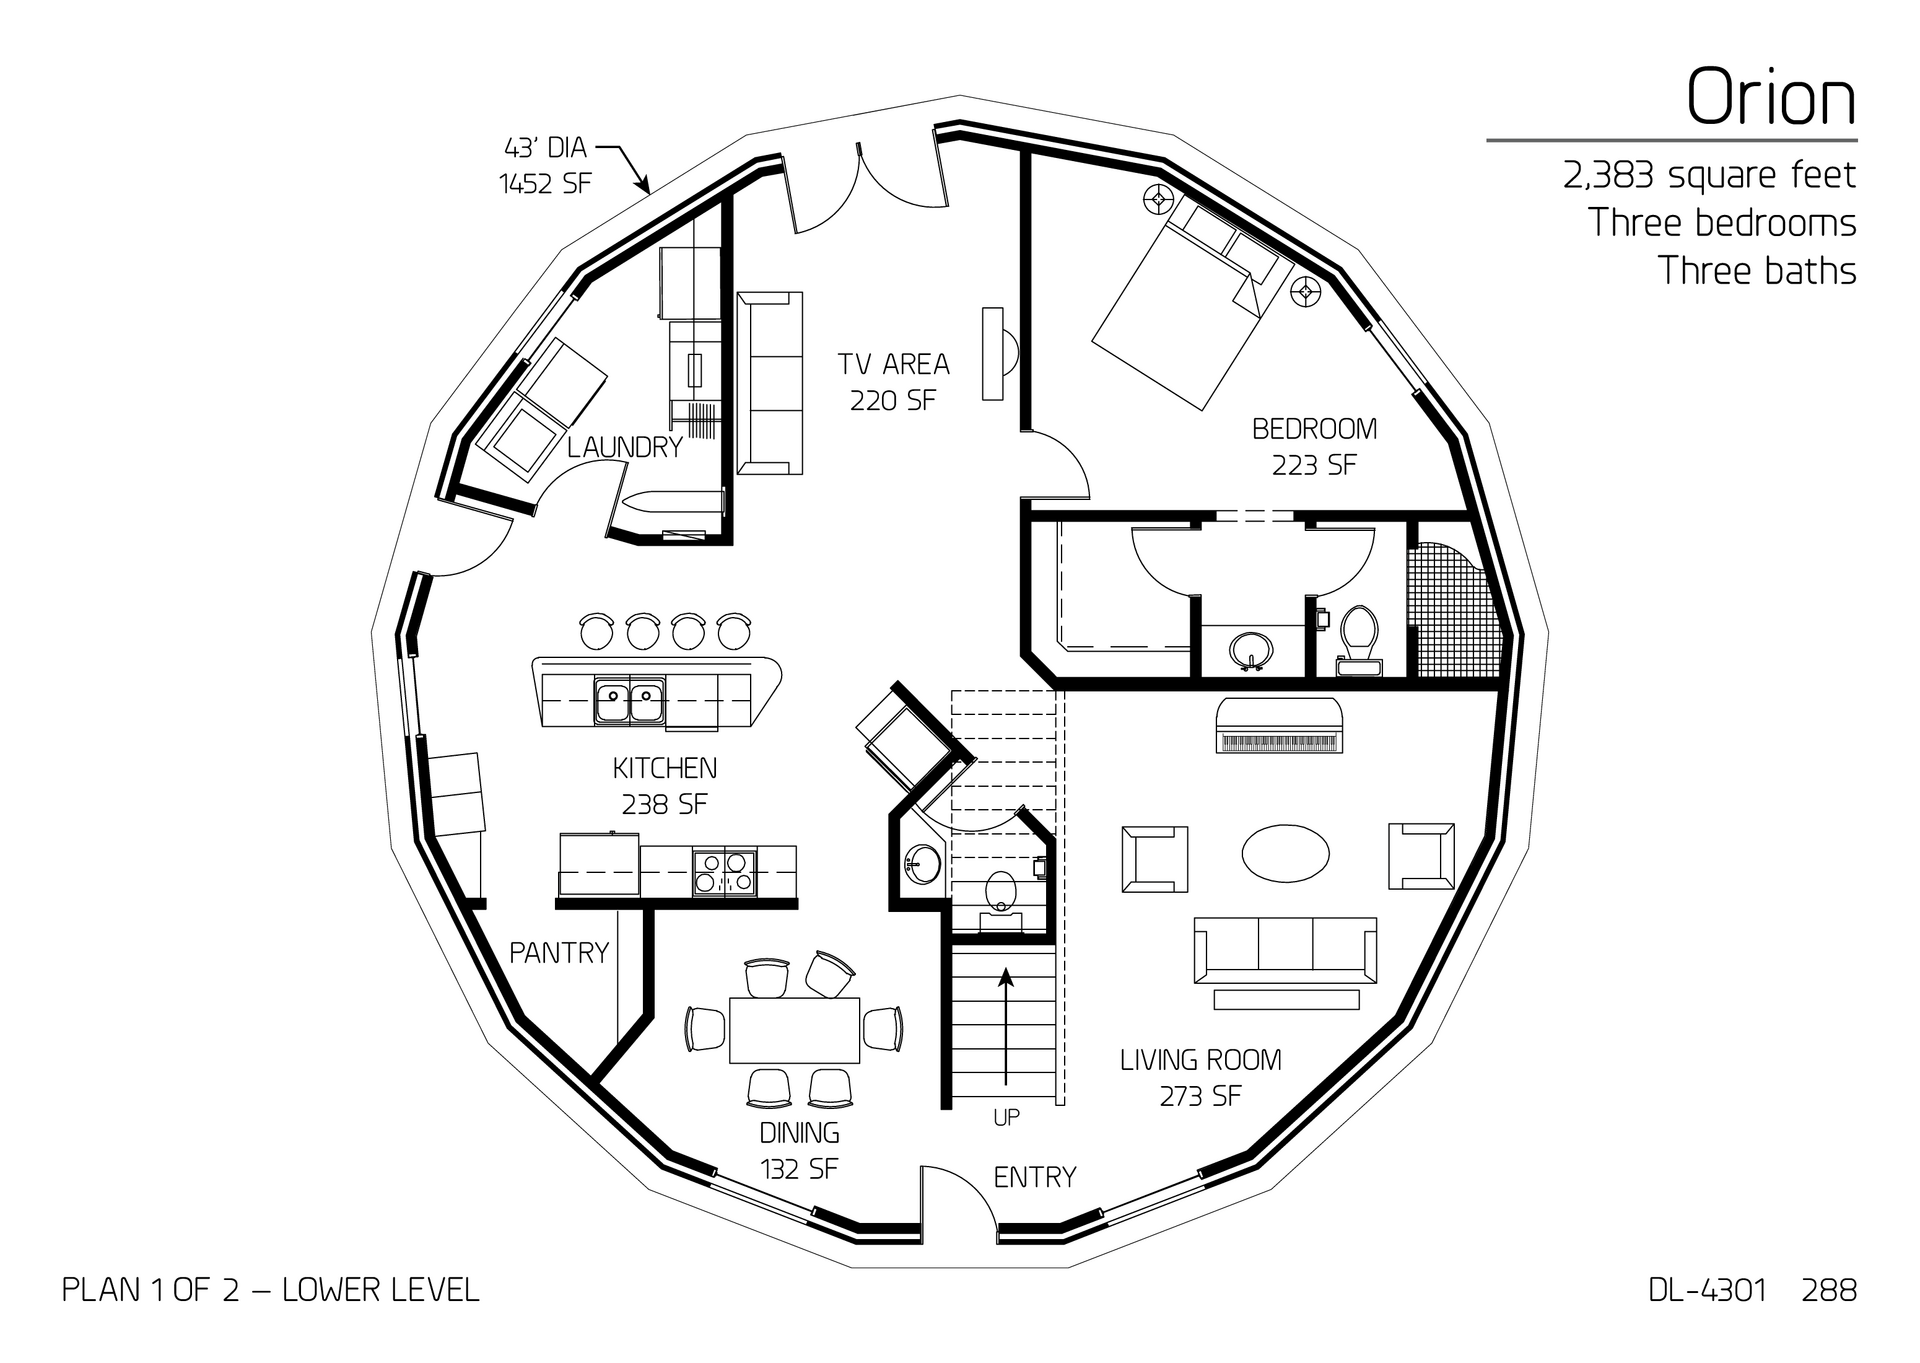 Orion: Main Floor of a 43' Diameter, 2,383 SF, Three-Bedroom, Two-and-a half-Bath Floor Plan.